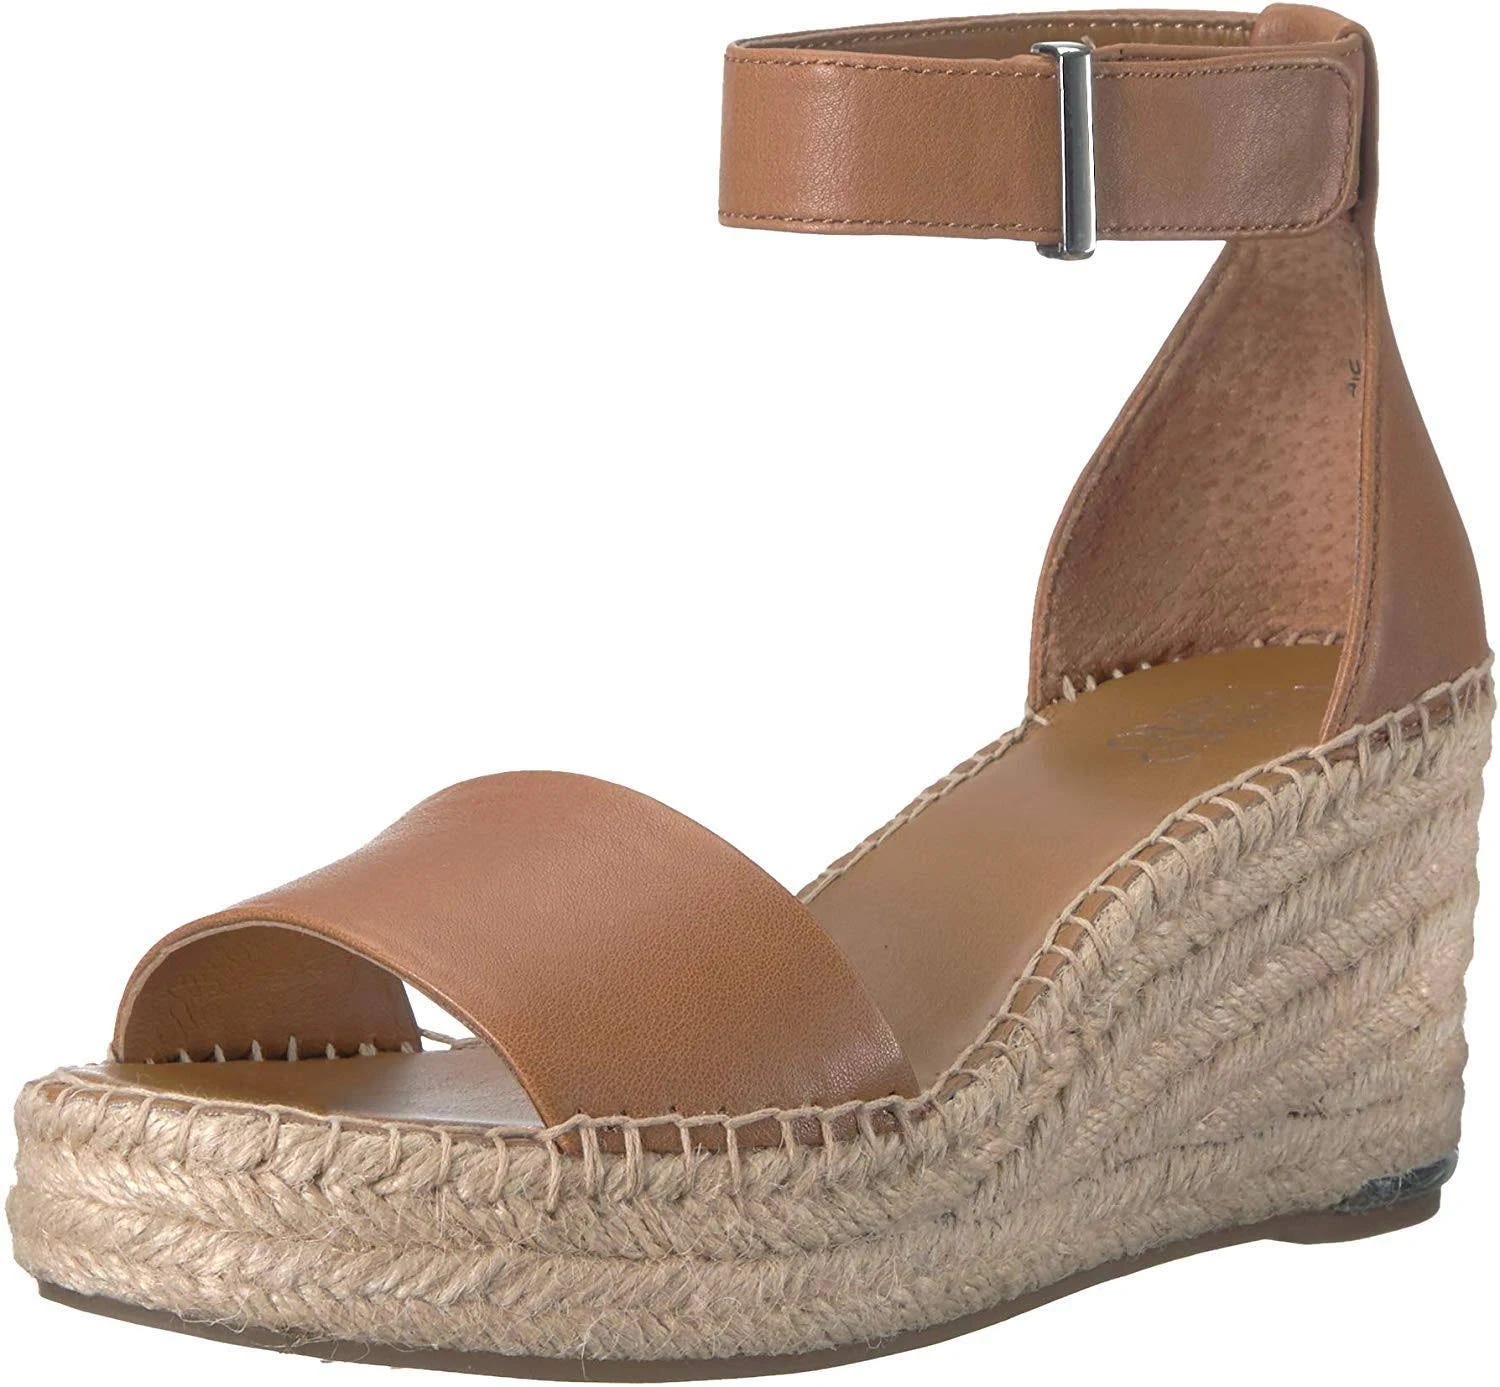 Sleek Franco Sarto Clemens Wedge Sandals in Tan | Image